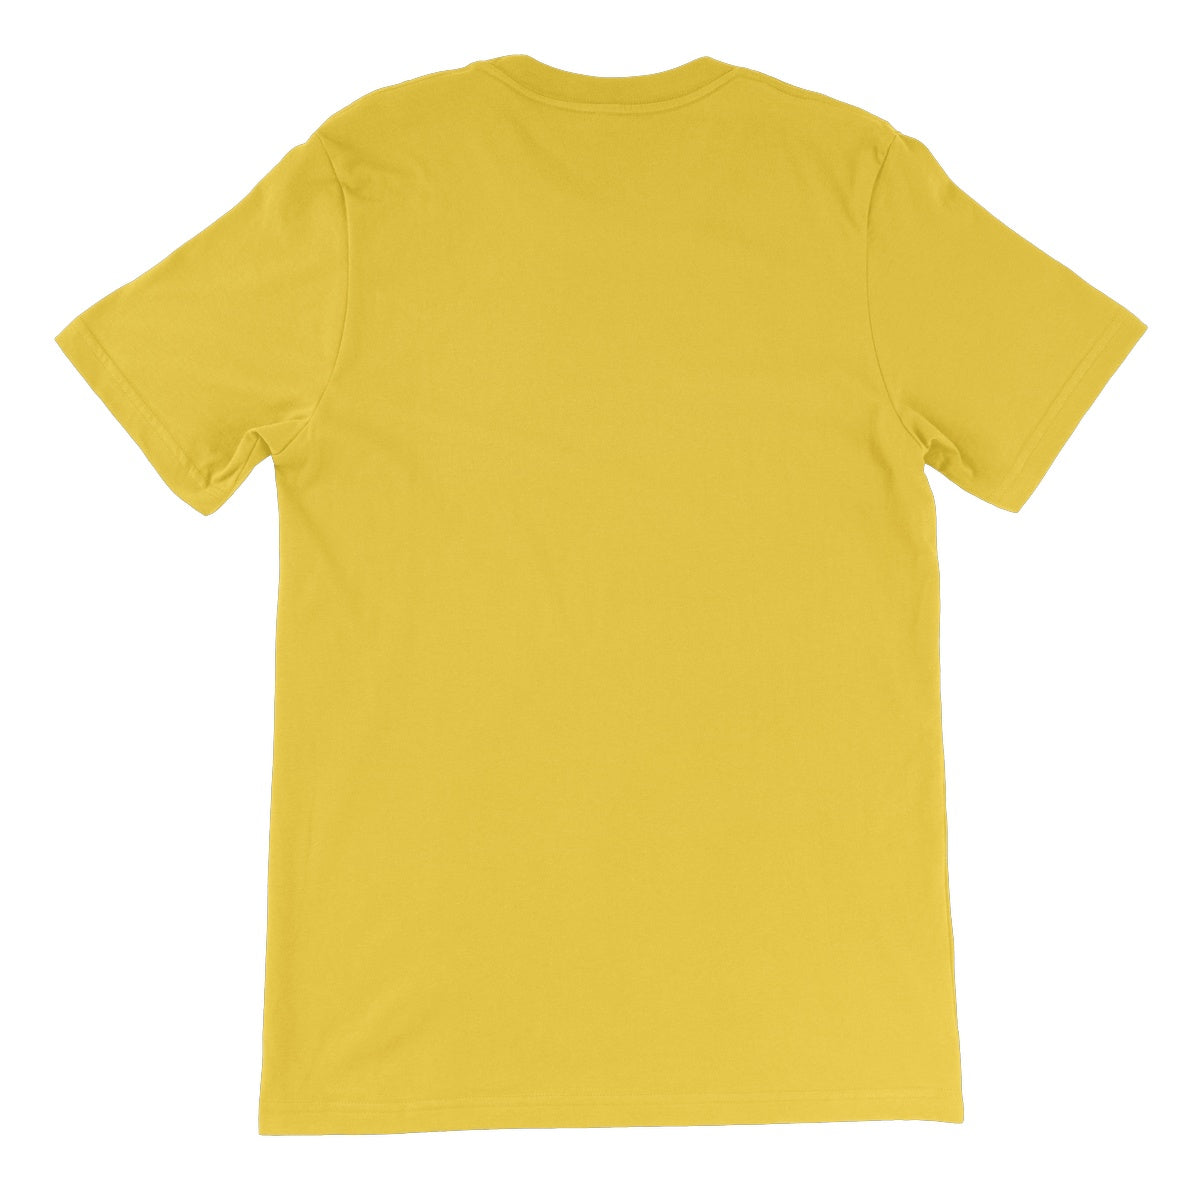 Short Circuit Illustrated Unisex Short Sleeve T-Shirt